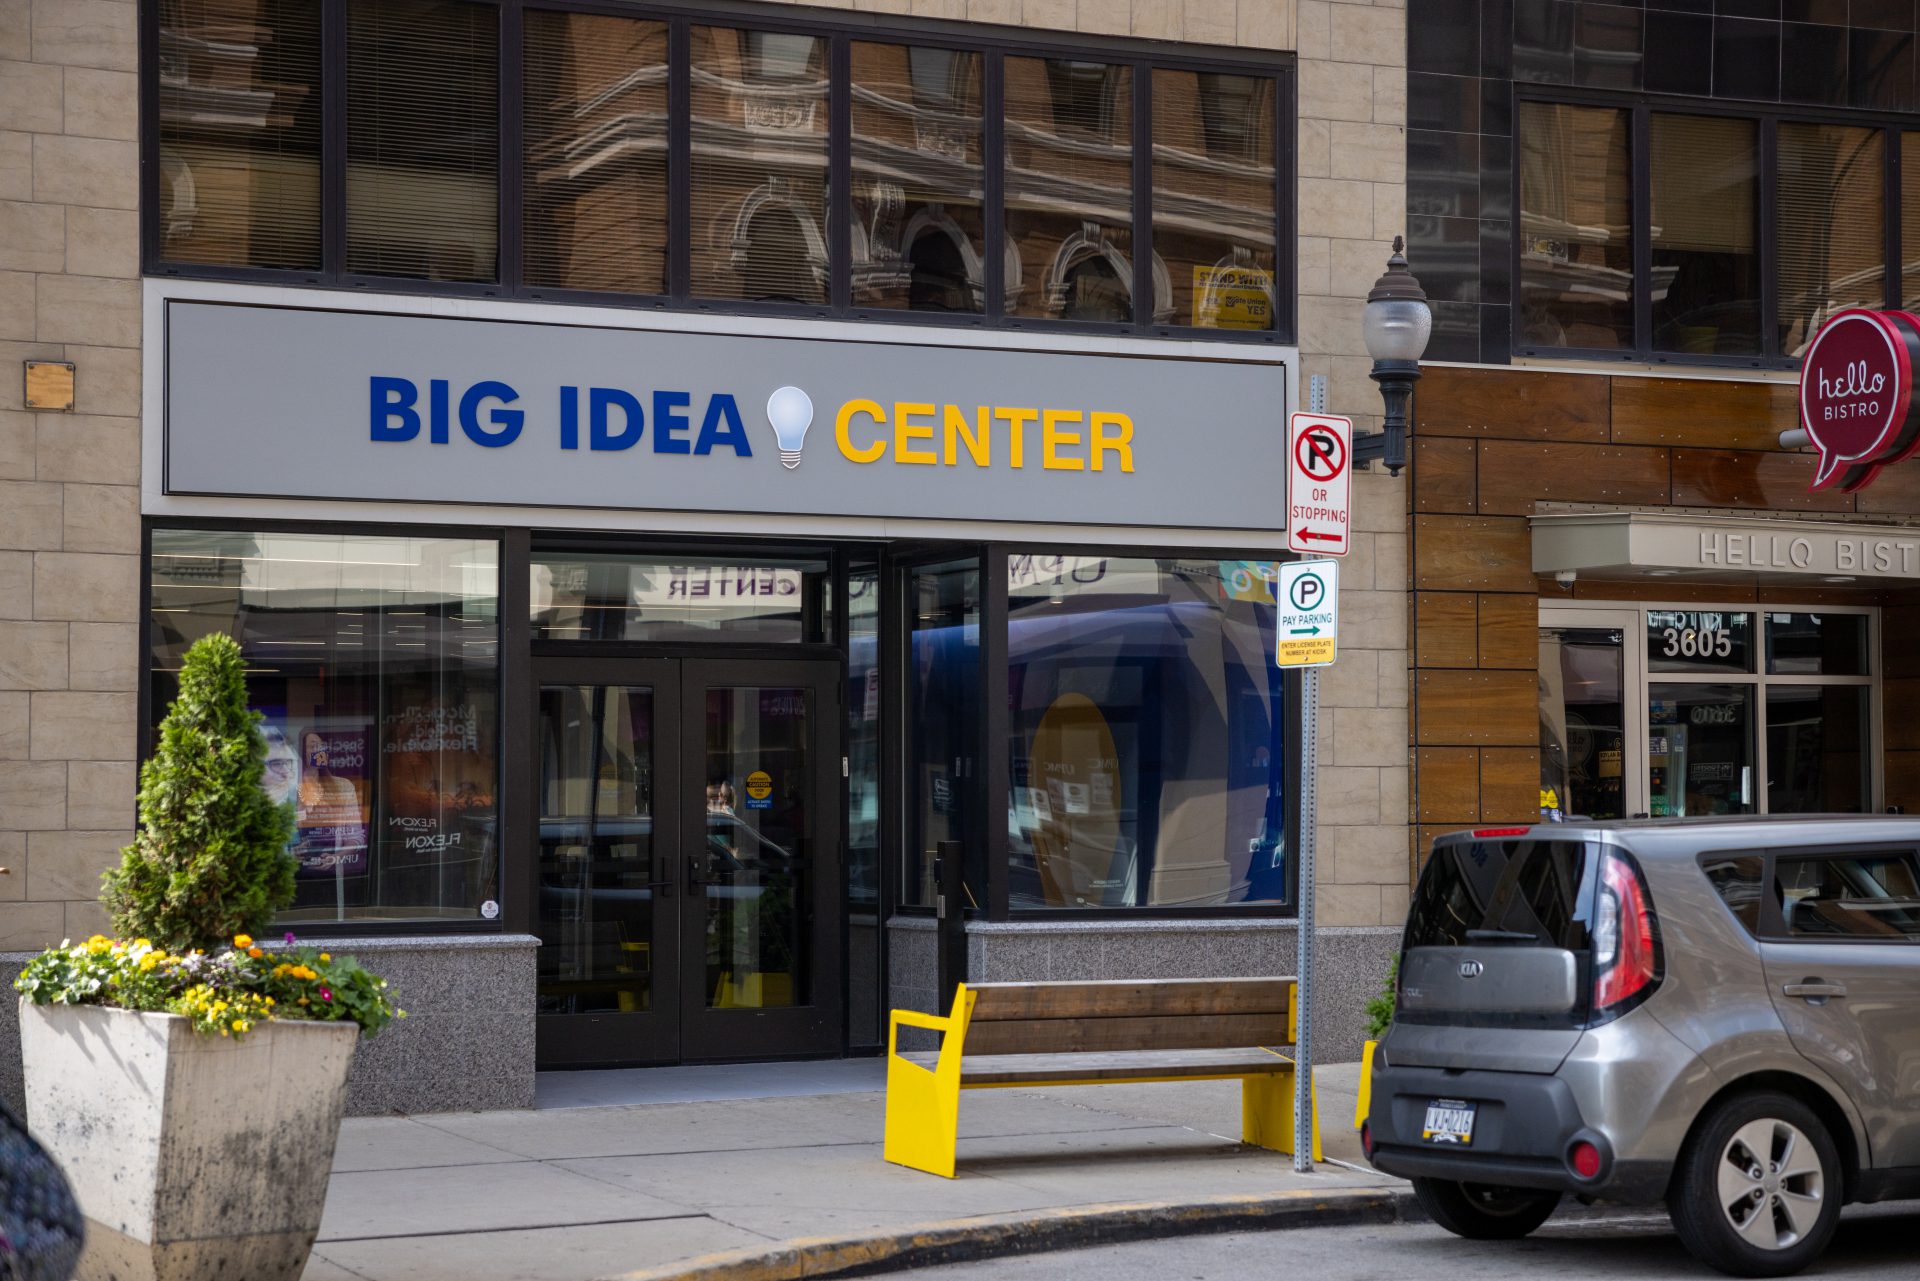 Big Idea Center exterior